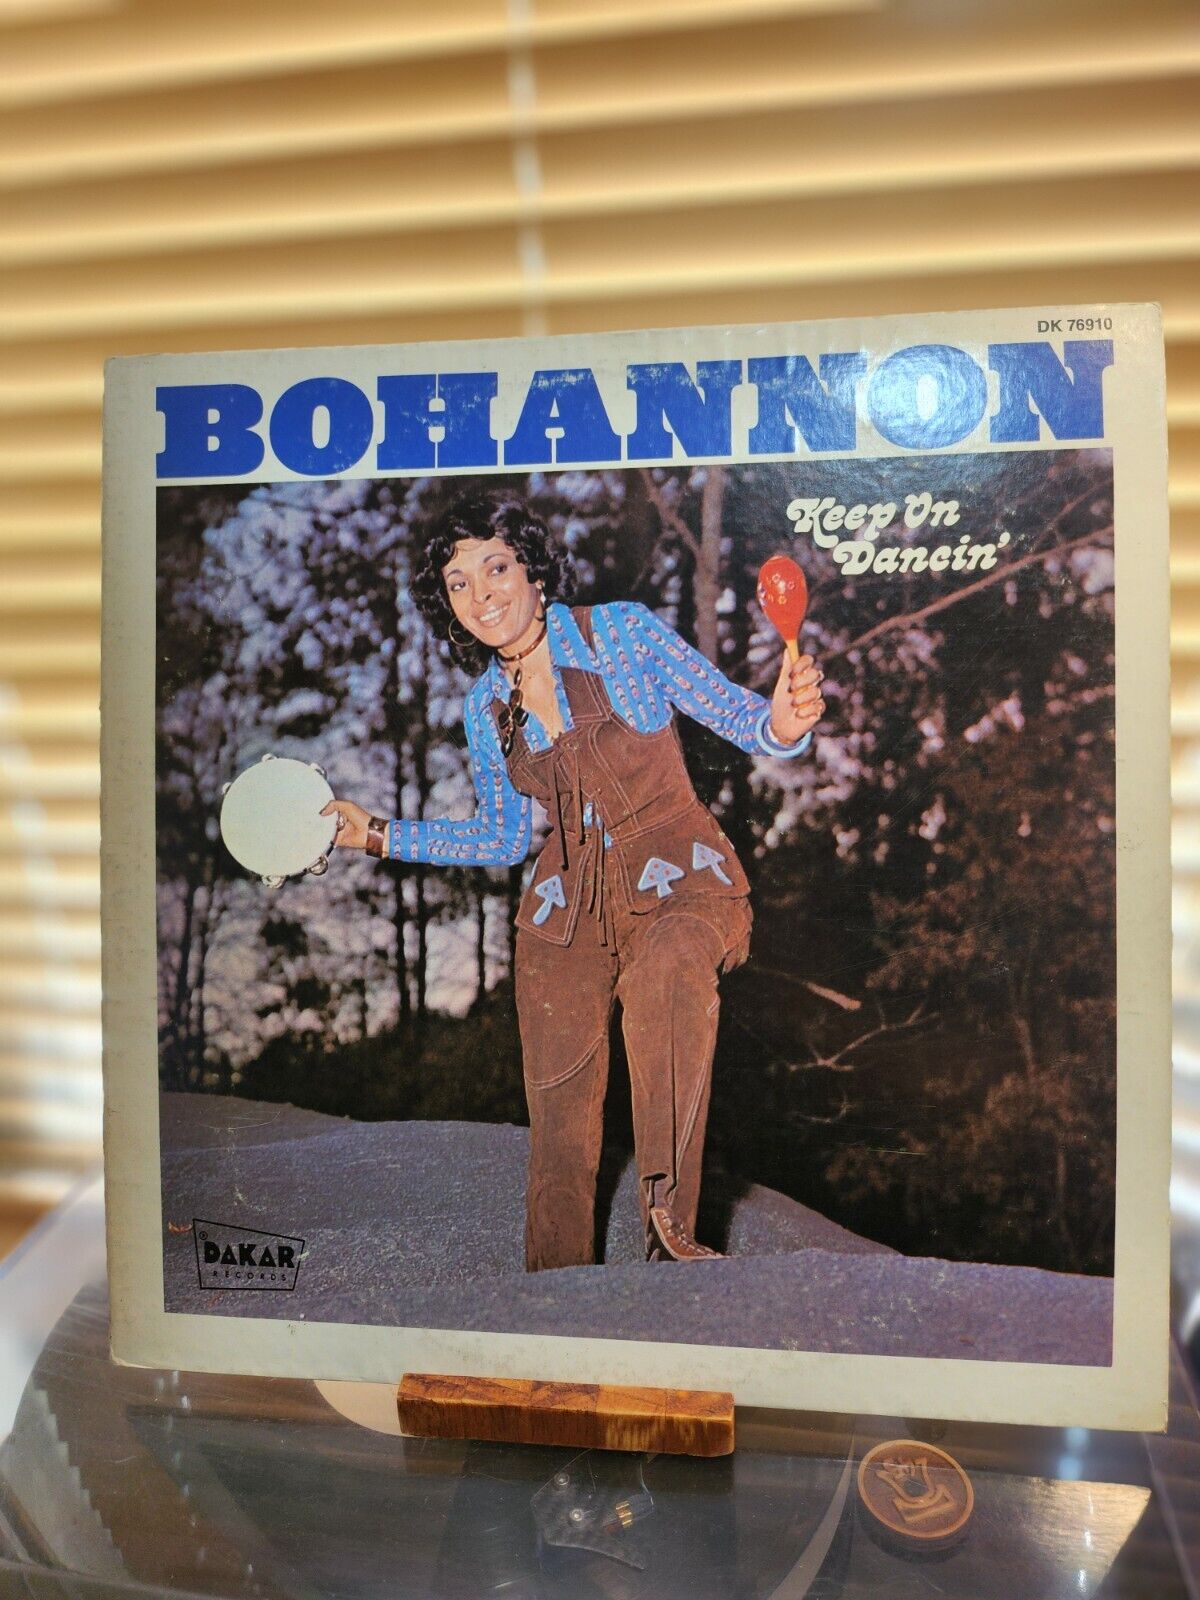 Hamilton Bohannon, Keep On Dancin, 1974 1st Dakar Stereo, DK 76910